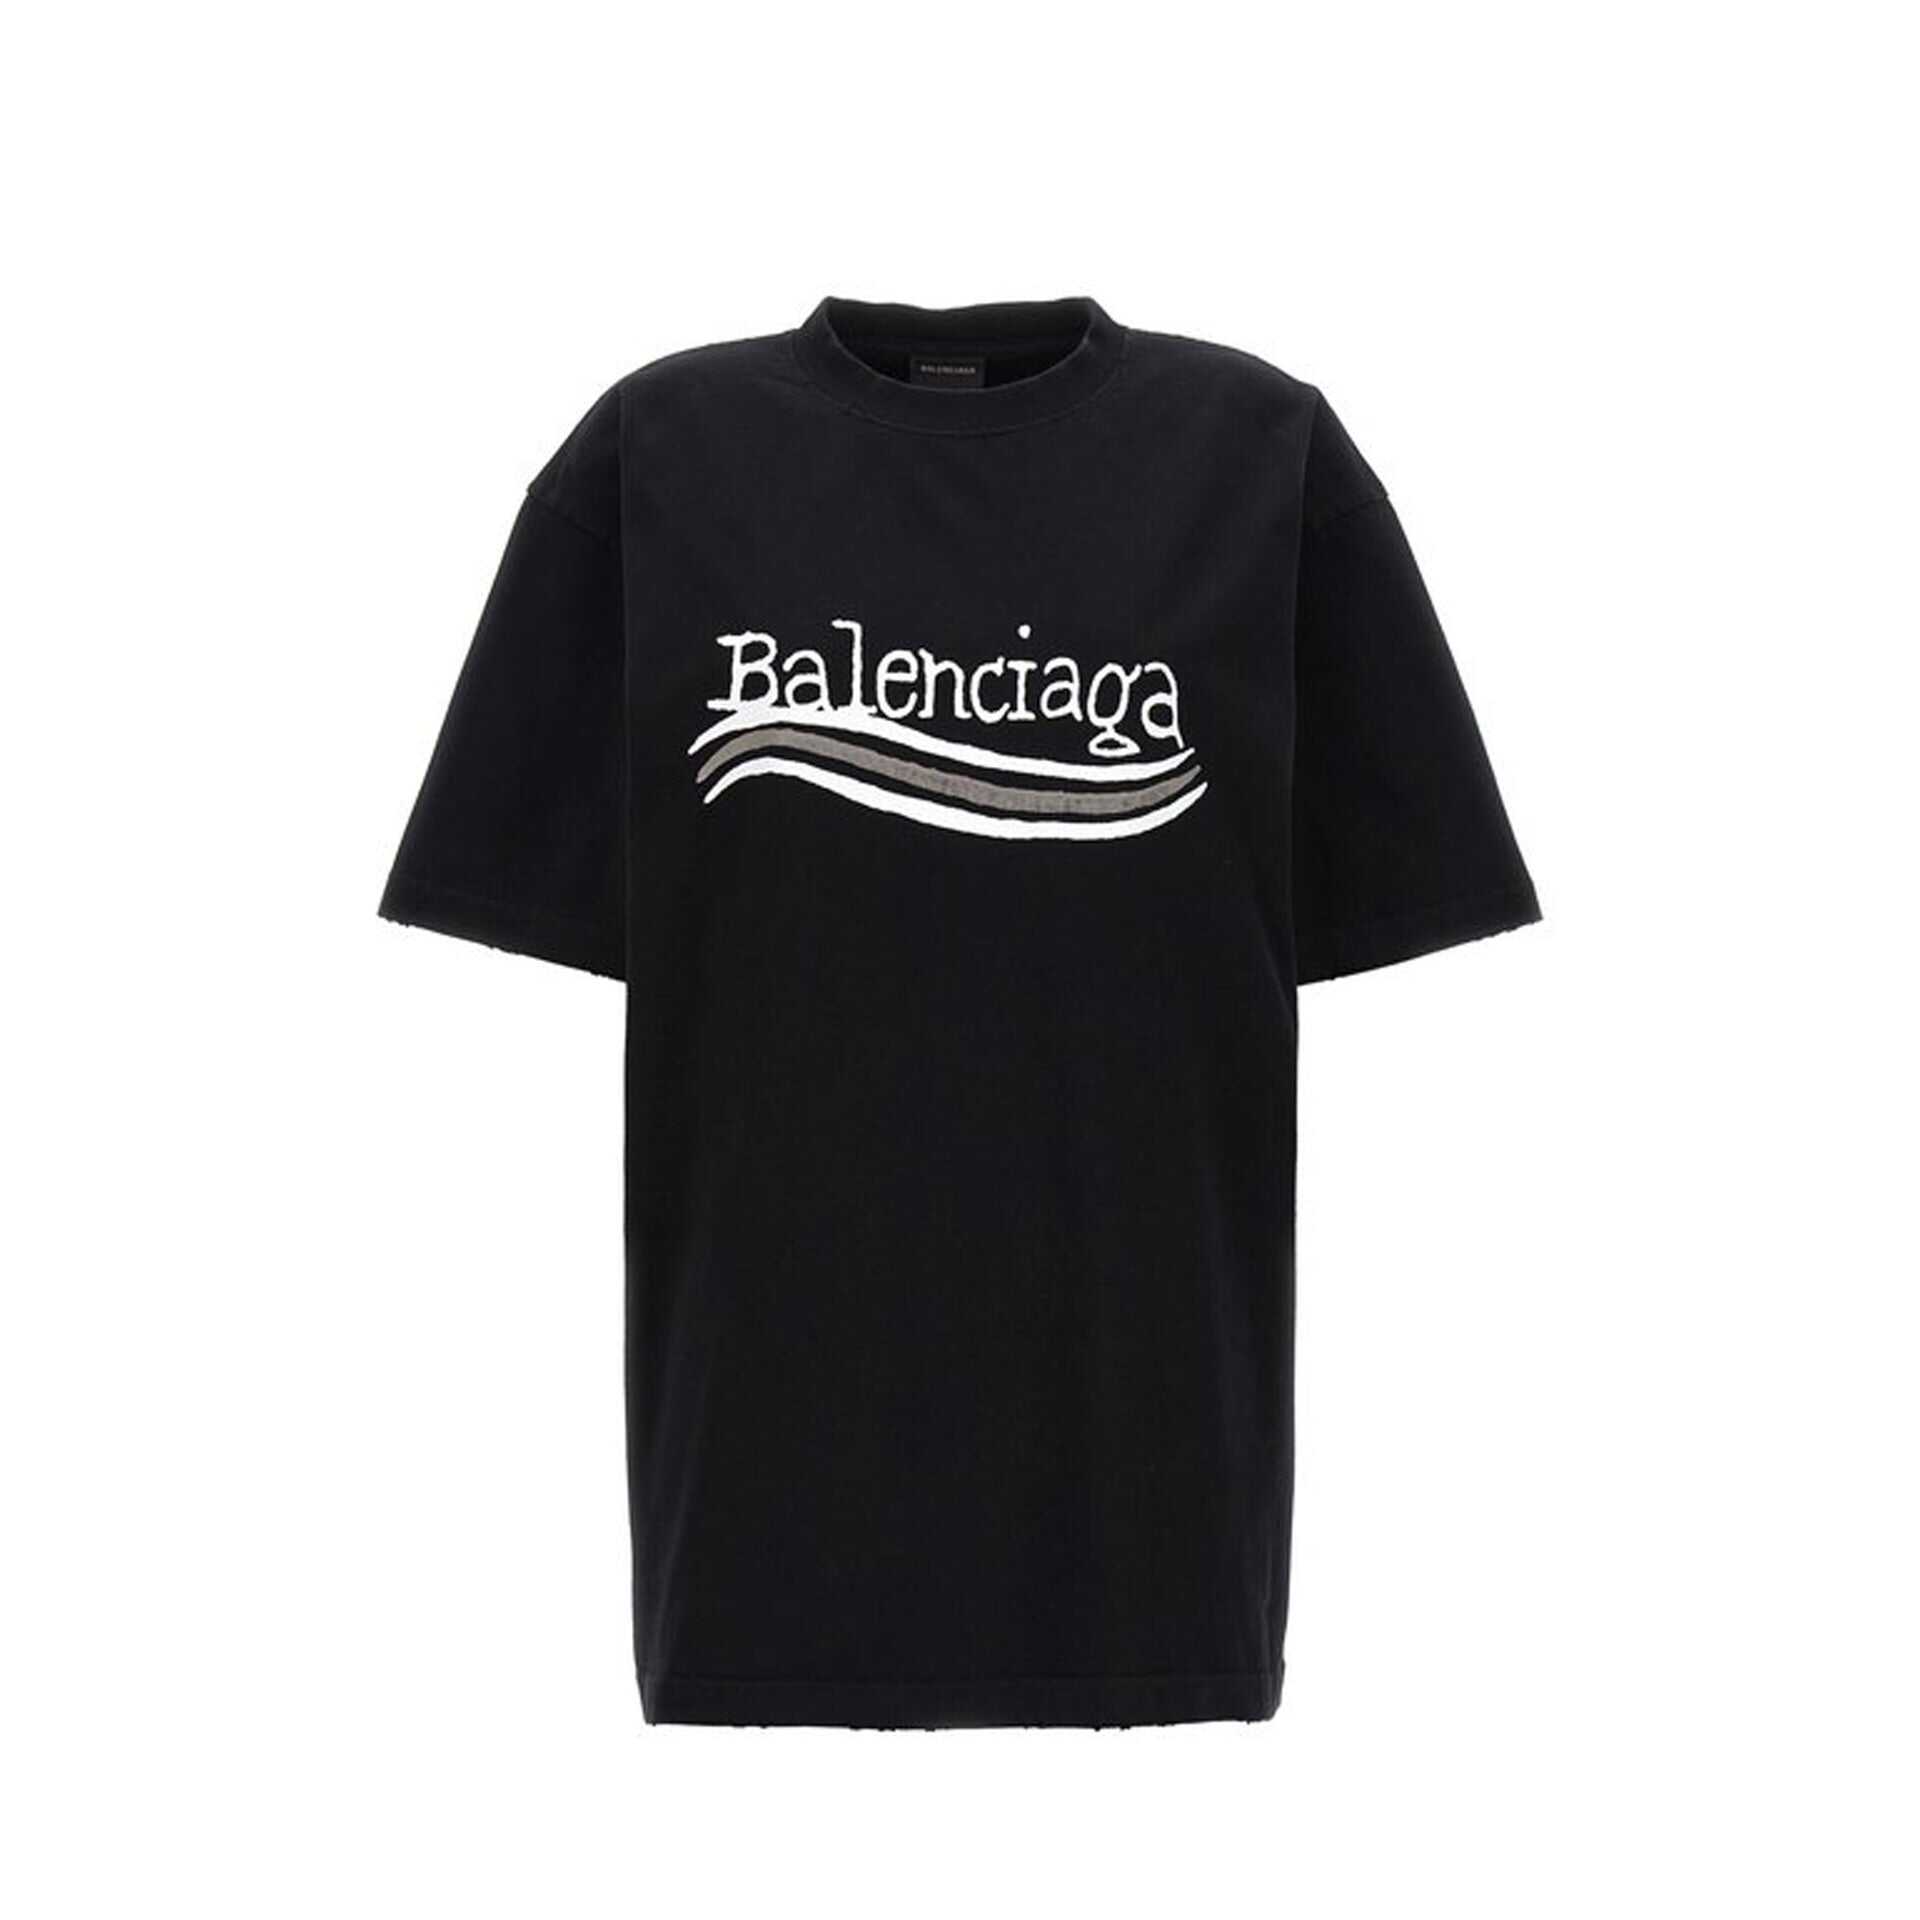 Balenciaga Balenciaga Hand Drawn T-Shirt Black